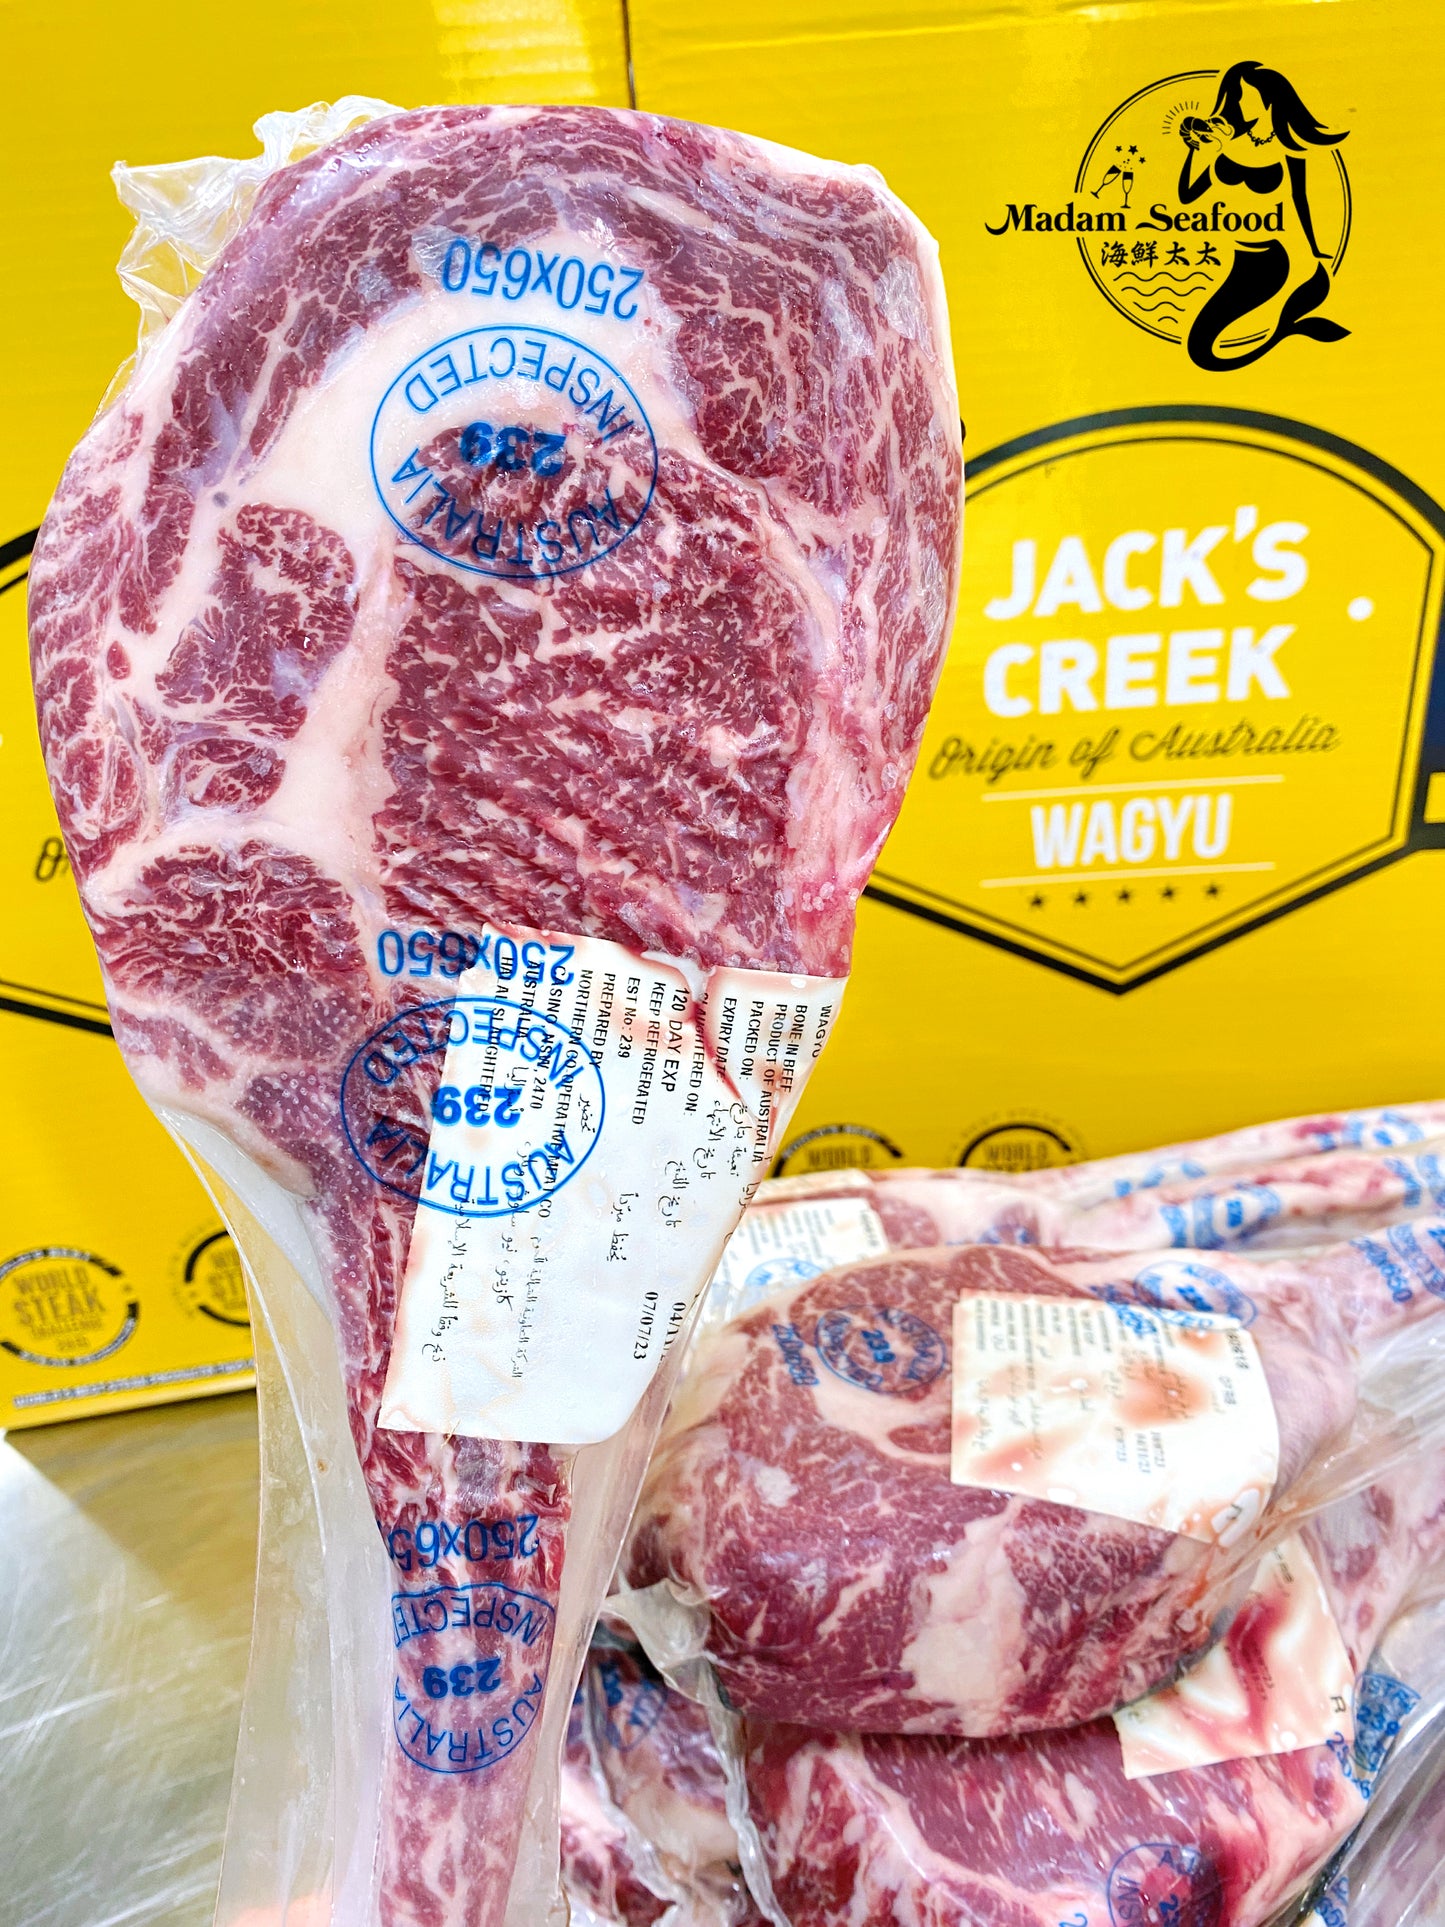 Jack's Creek Purebred Wagyu M8/9 Tomahawk Steak